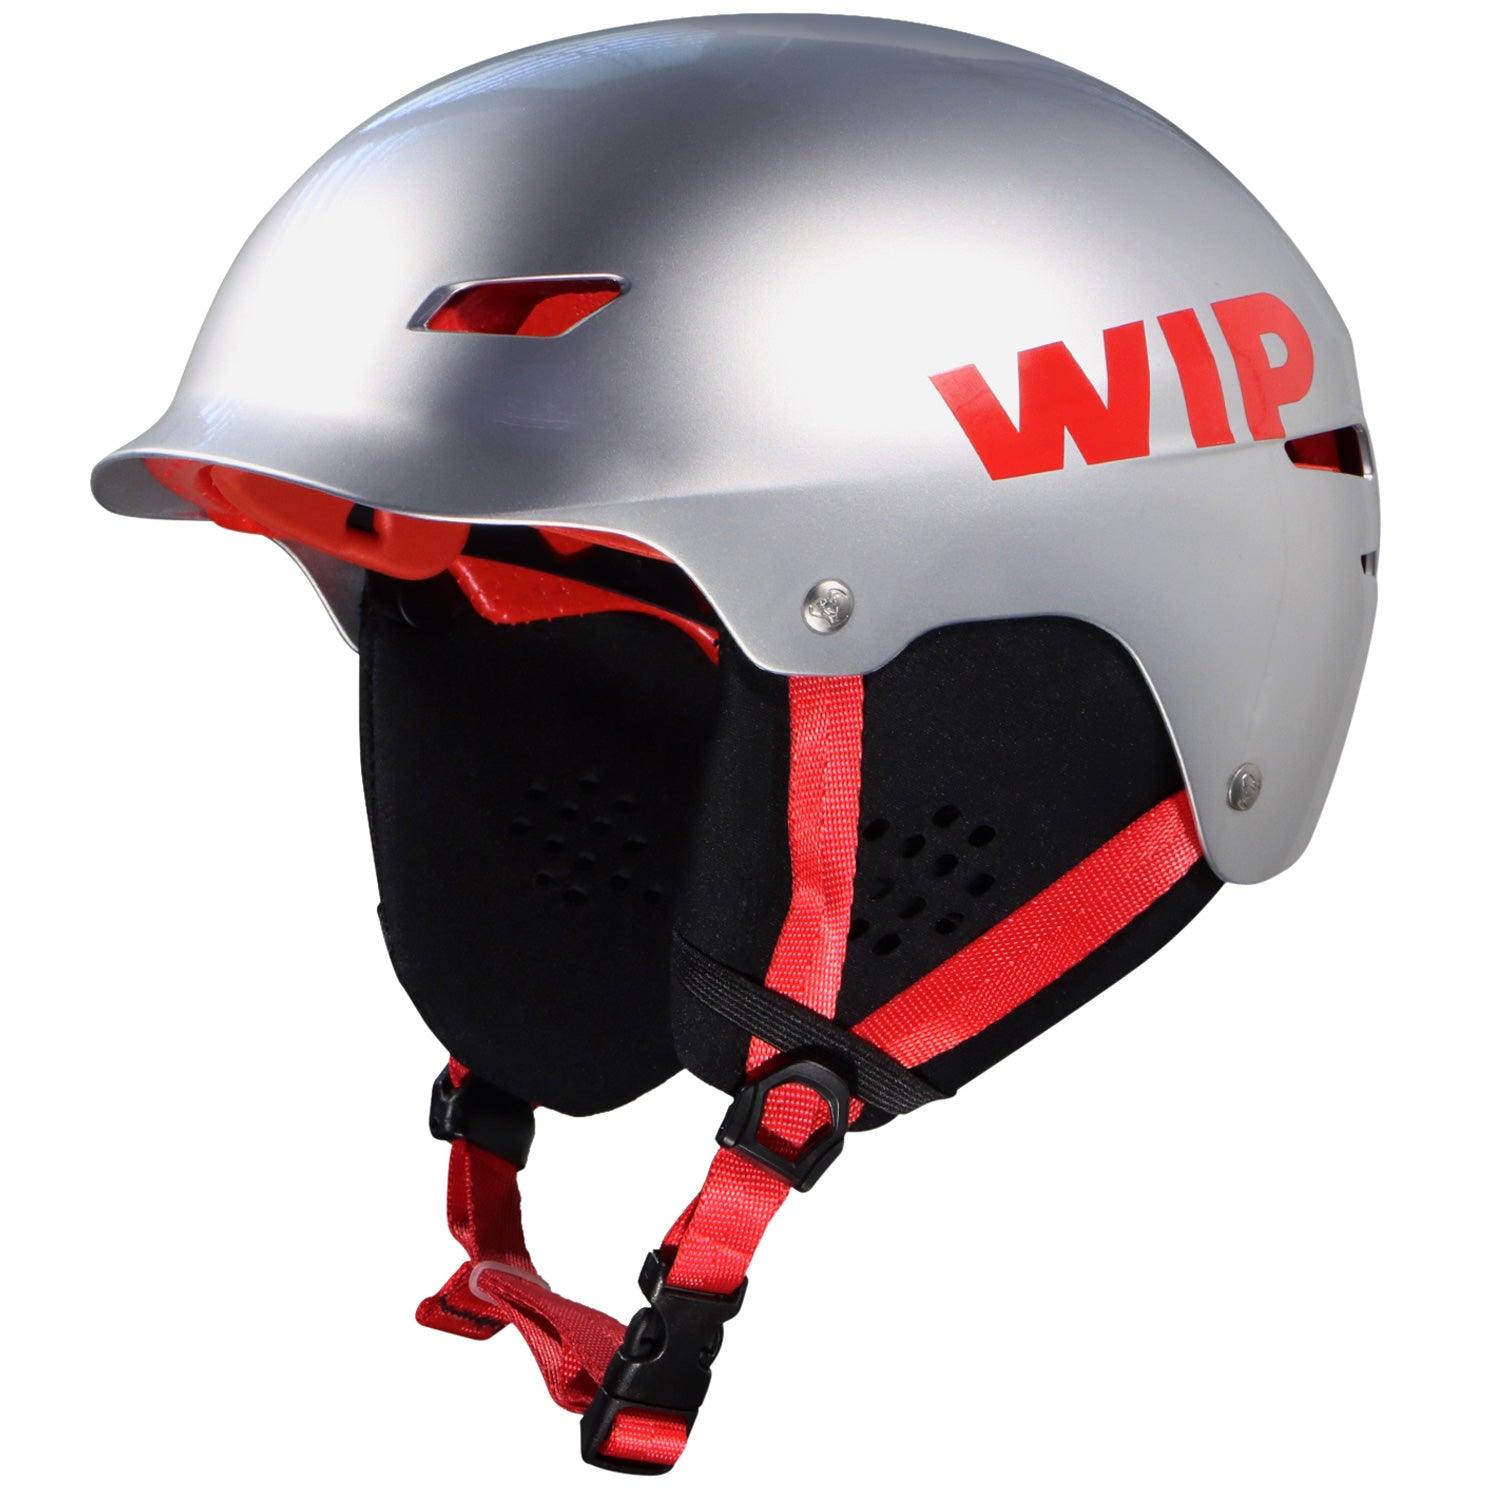 Forward Wip Pro Wipper 2.0 Safety Helmet - Powerkiteshop